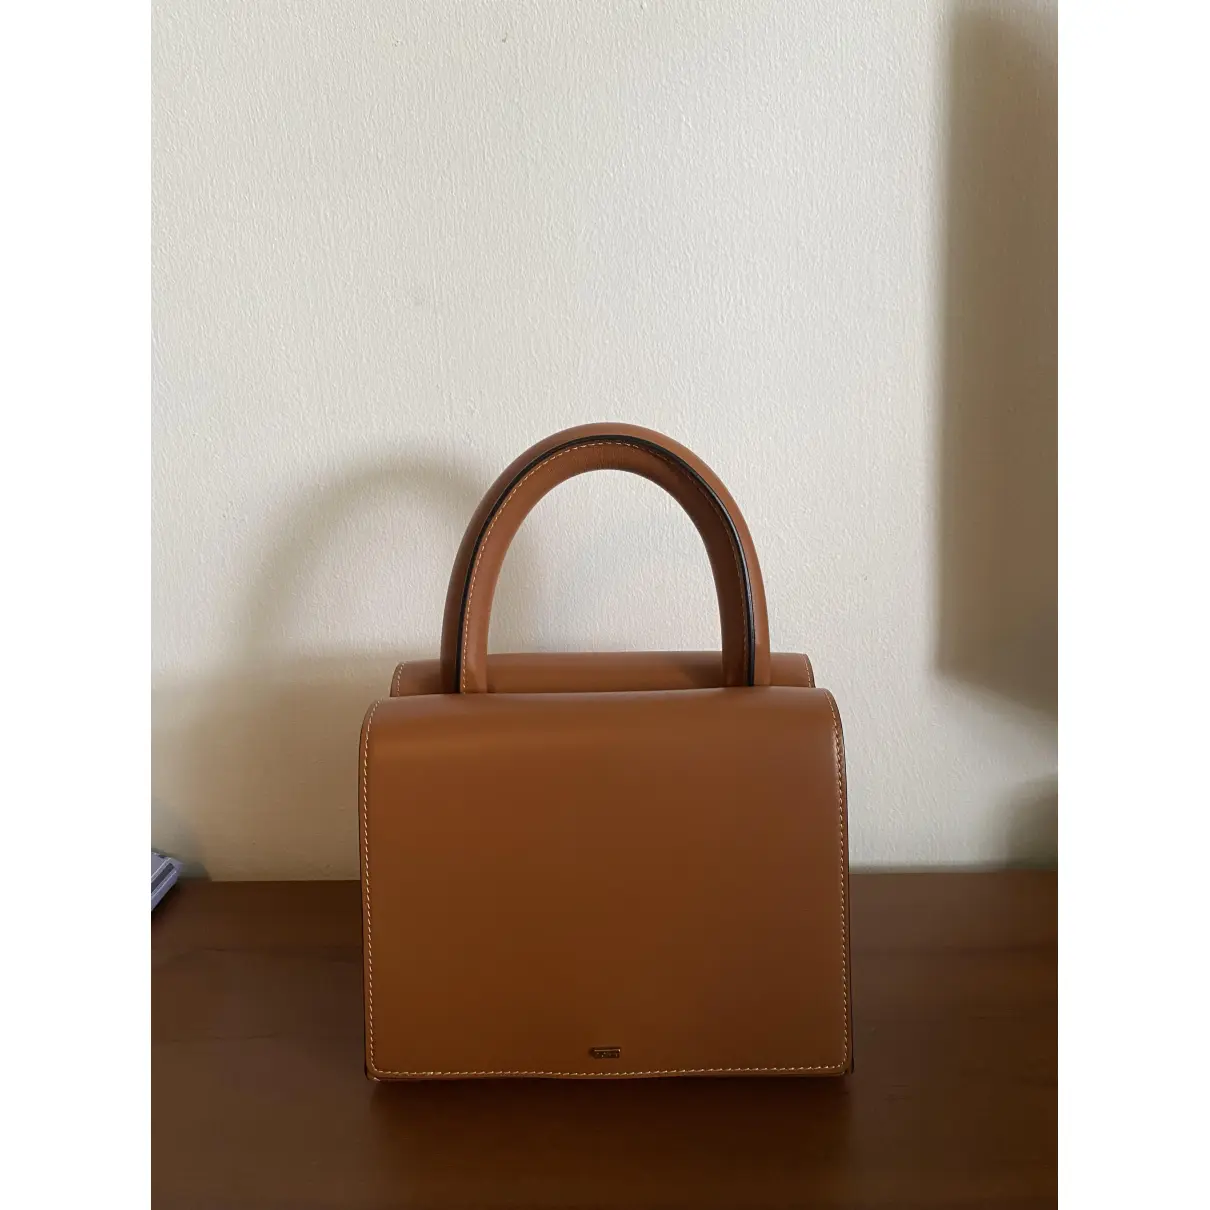 Buy Boyy Lucas 19 leather handbag online